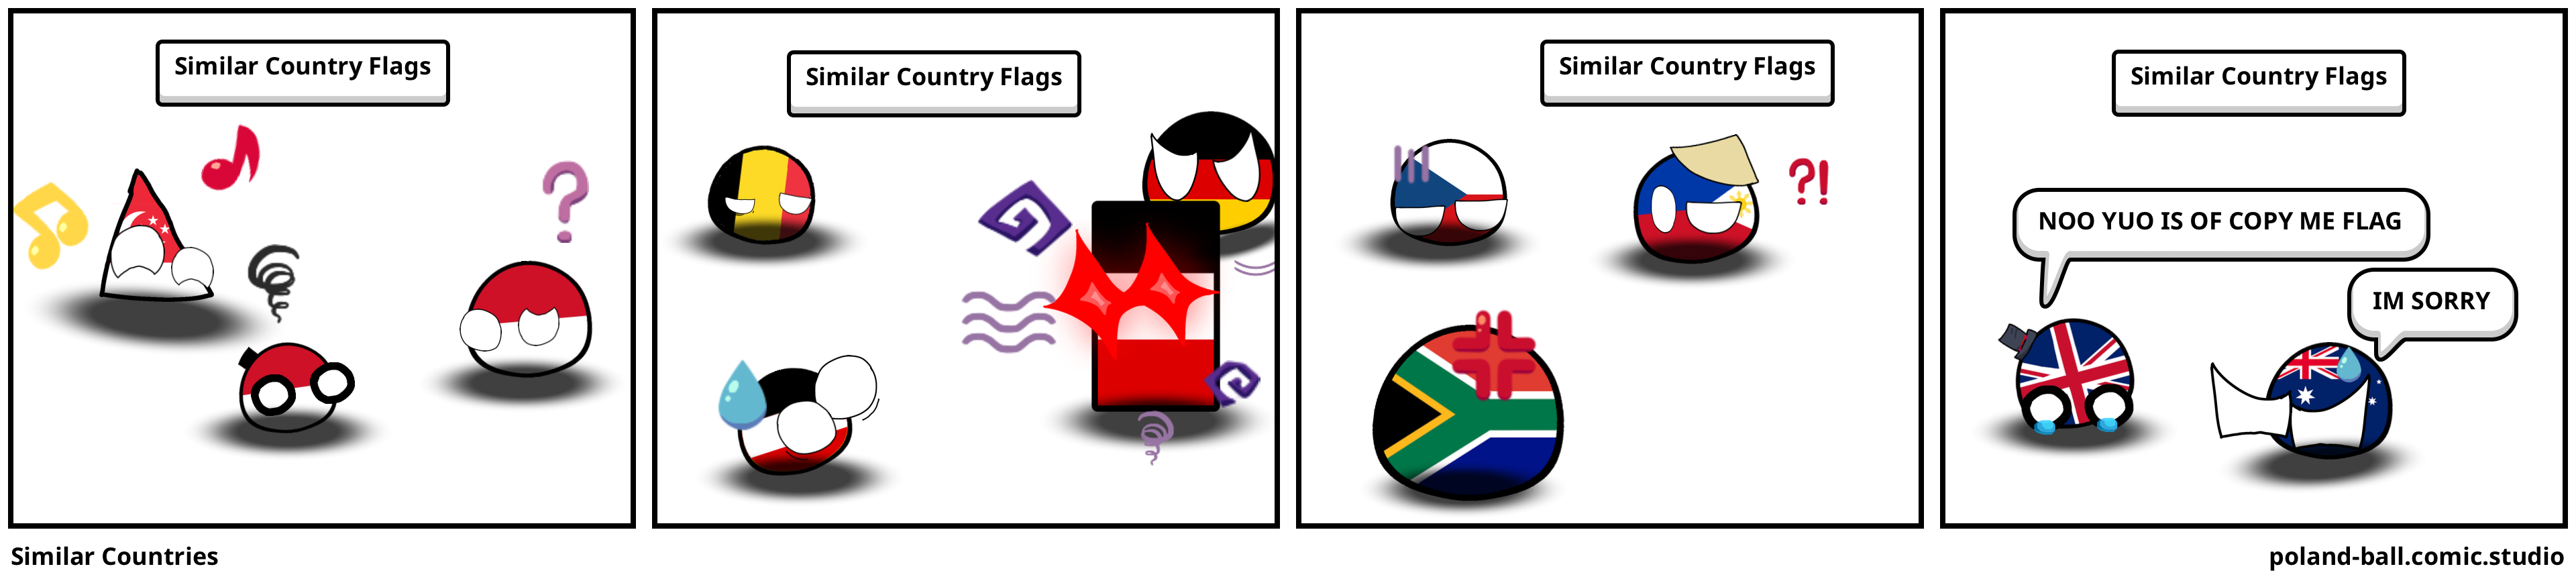 Similar Countries